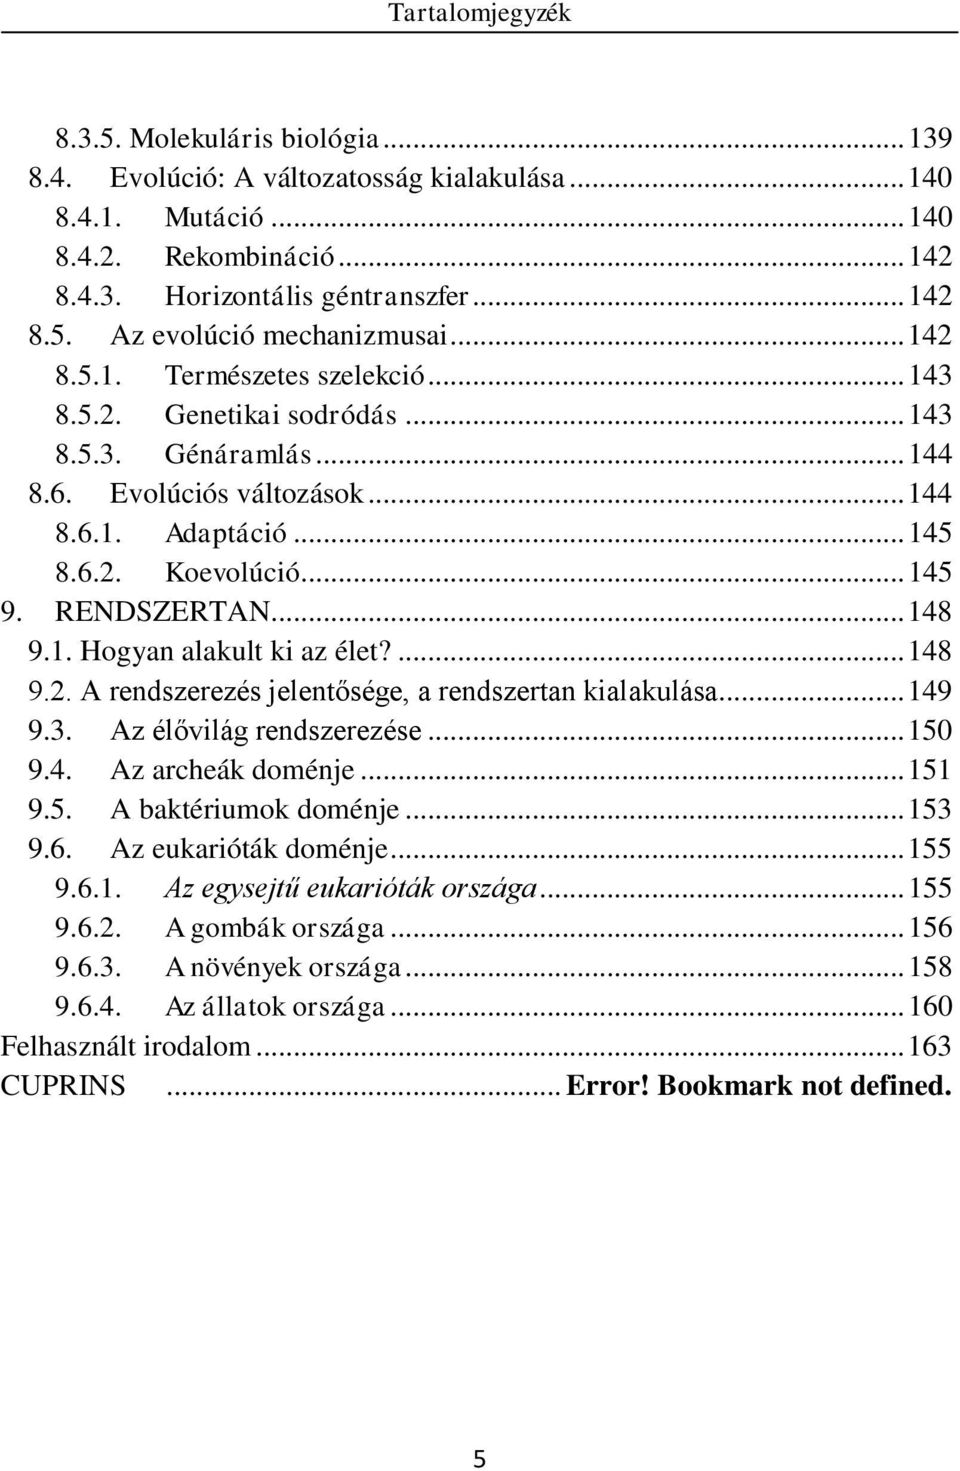 Általános biológia. Mara Gyöngyvér. Általános biológia. Jegyzet. Editura  Cermi Iași - PDF Free Download